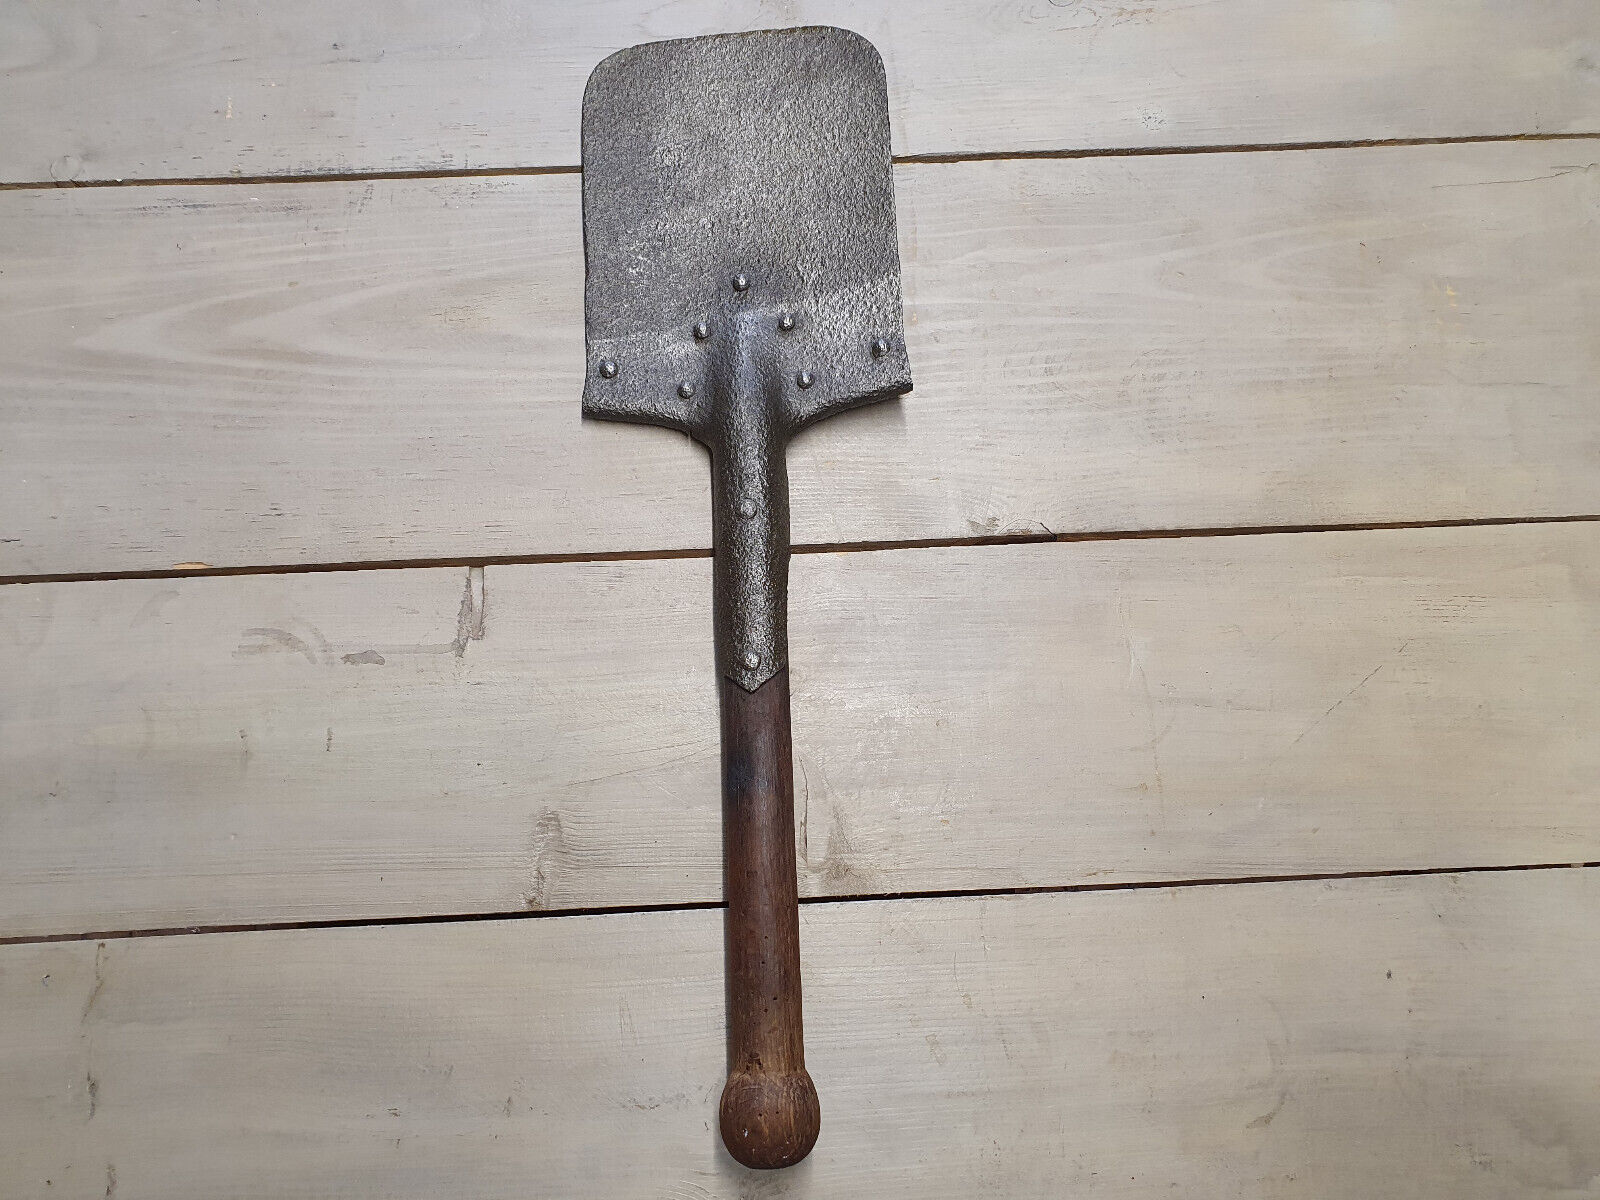 Original German WWI WWII Field Shovel M1898 E Tool Spade WW1 Imperial Authentic